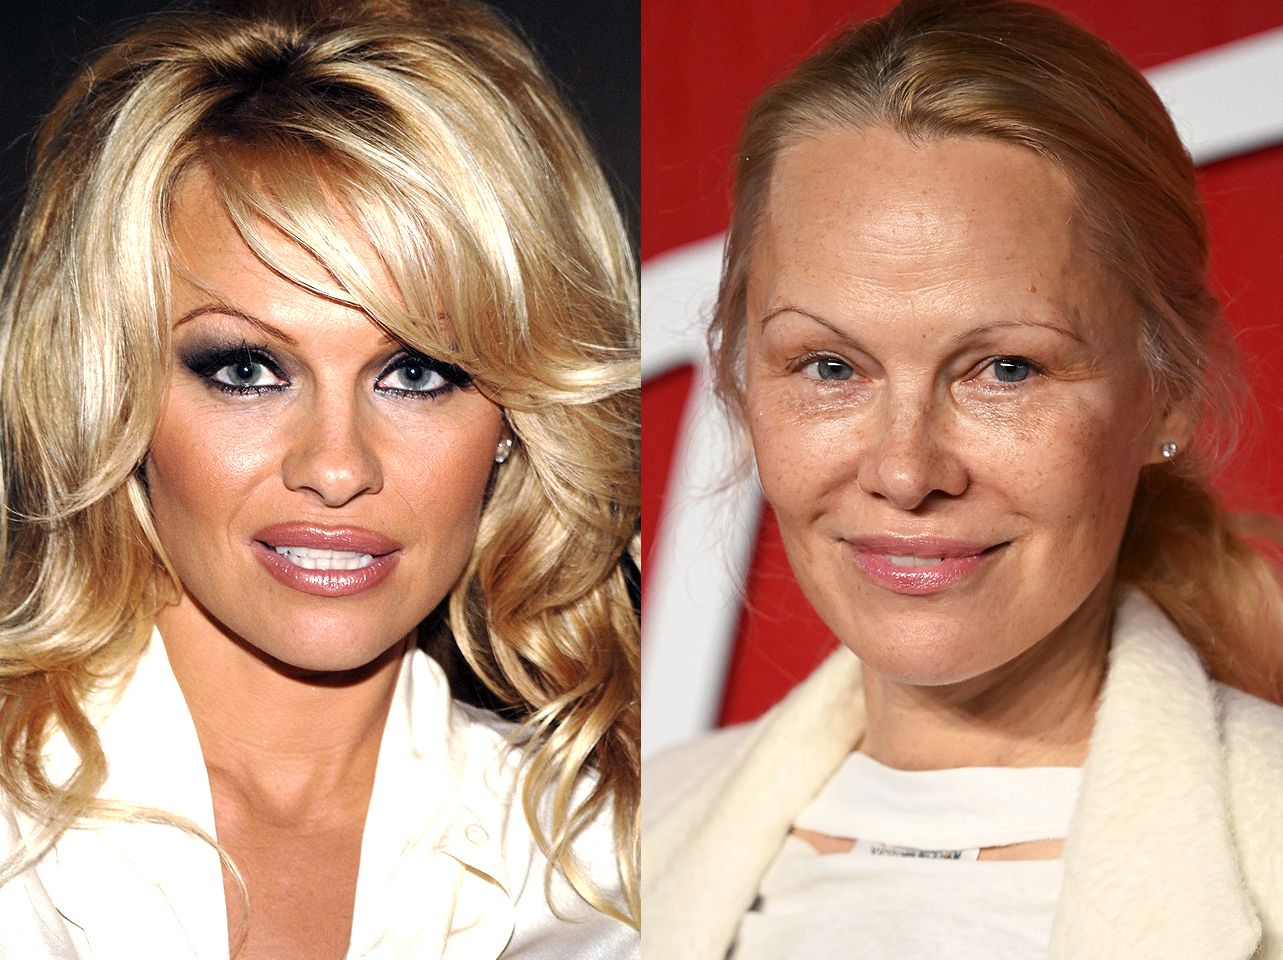 Pamela Anderson with makeup vs without makeup | Source: Getty Images | Instagram/pamelaanderson